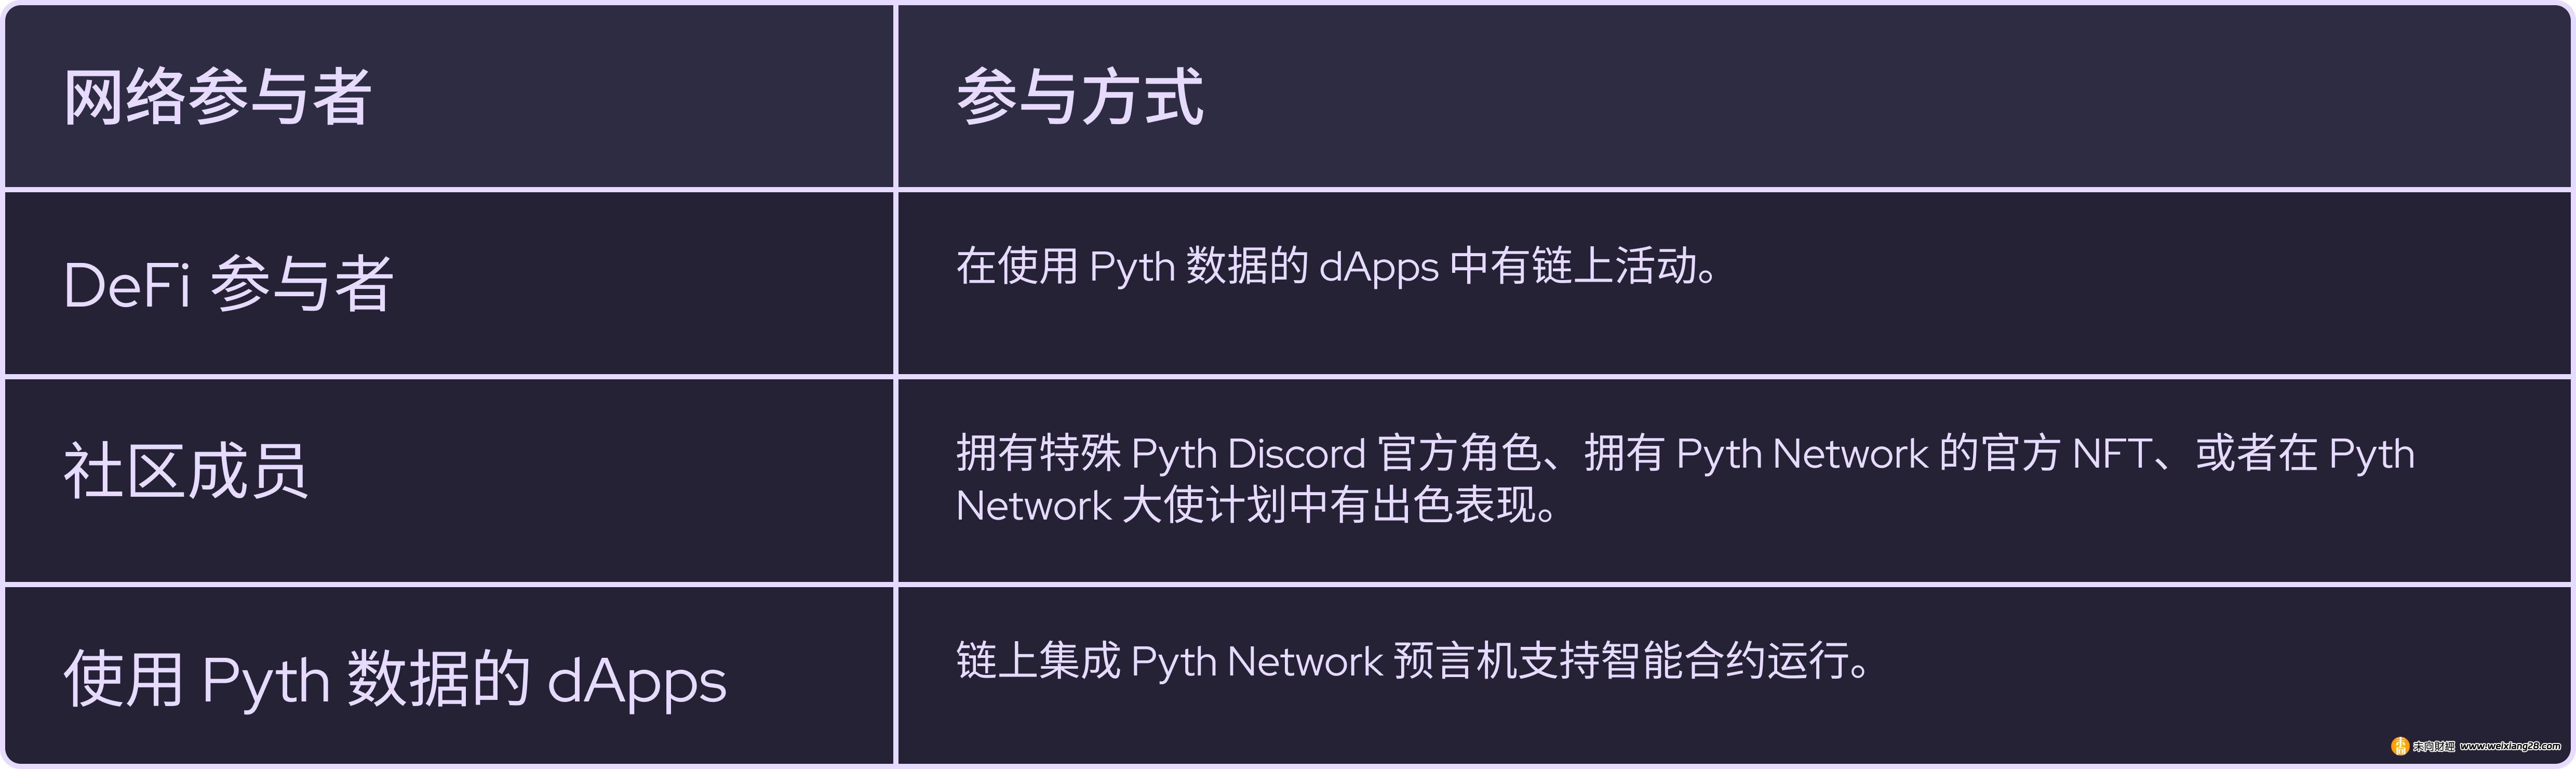 Pyth Network 回溯性空投計劃插图2